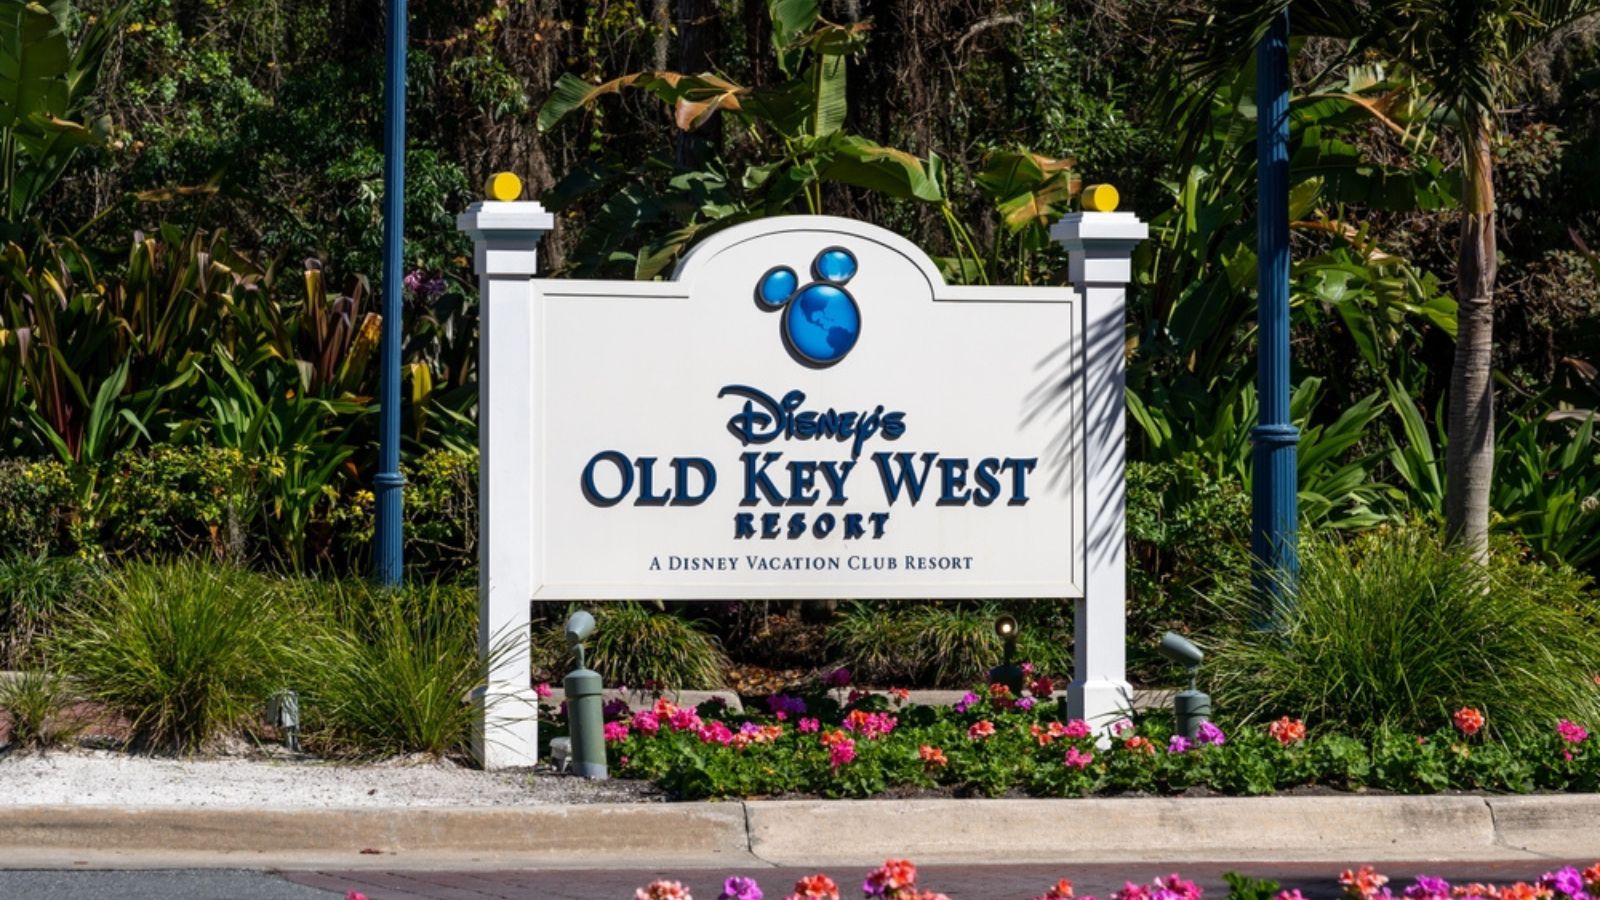 Disney's Old Key West Resort.